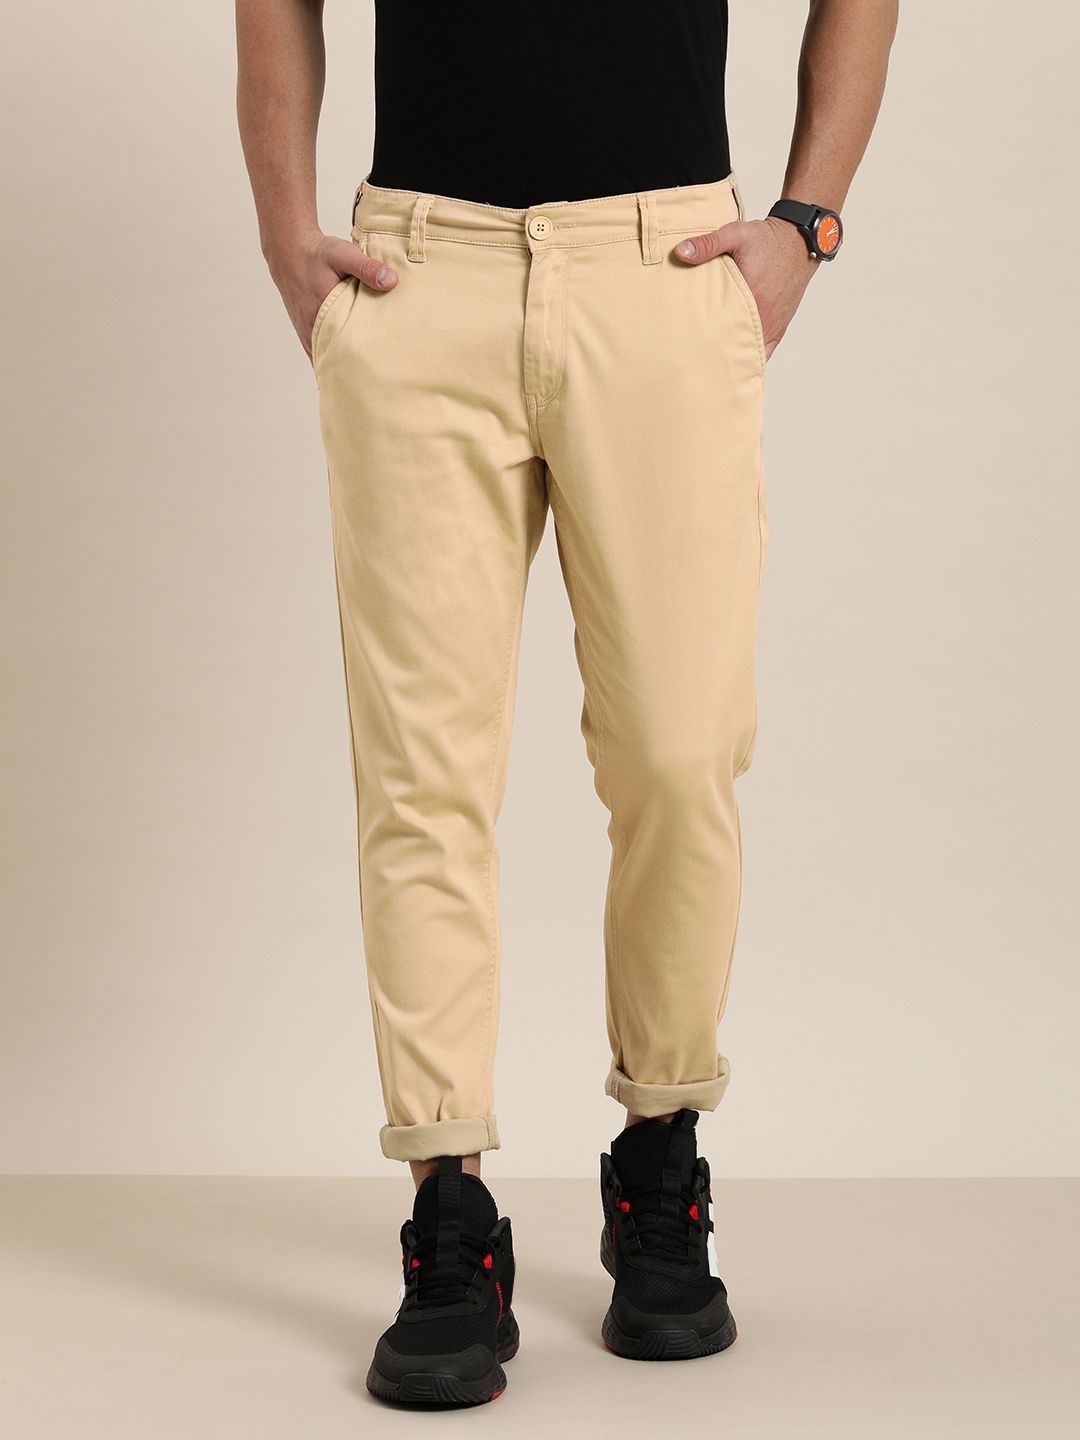 Buy Moda Rapido Trousers Online In India